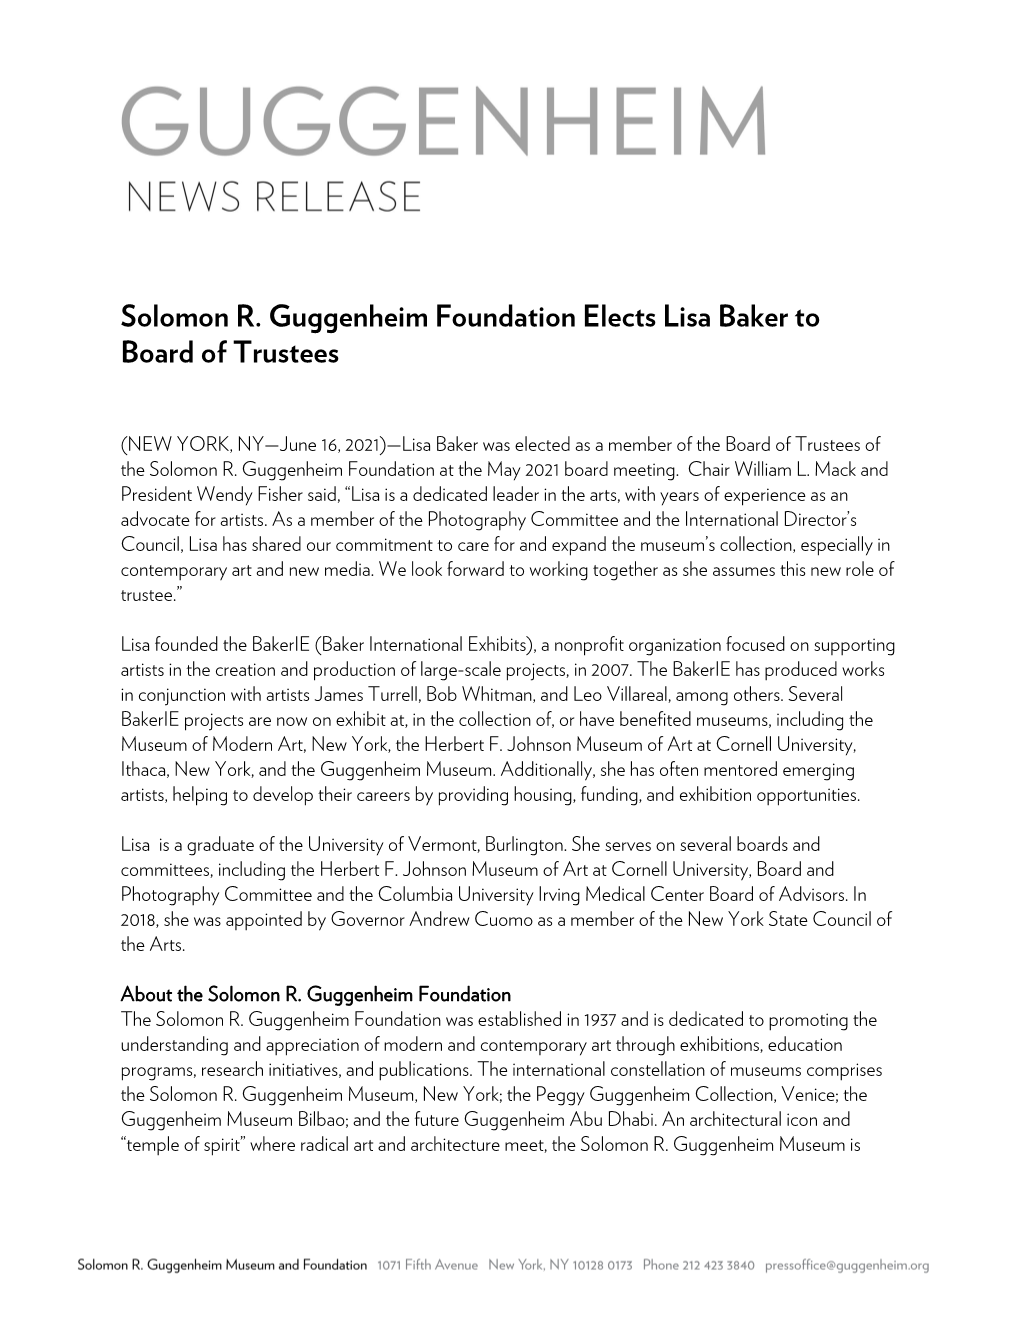 Solomon R. Guggenheim Foundation Elects Lisa Baker to Board of Trustees